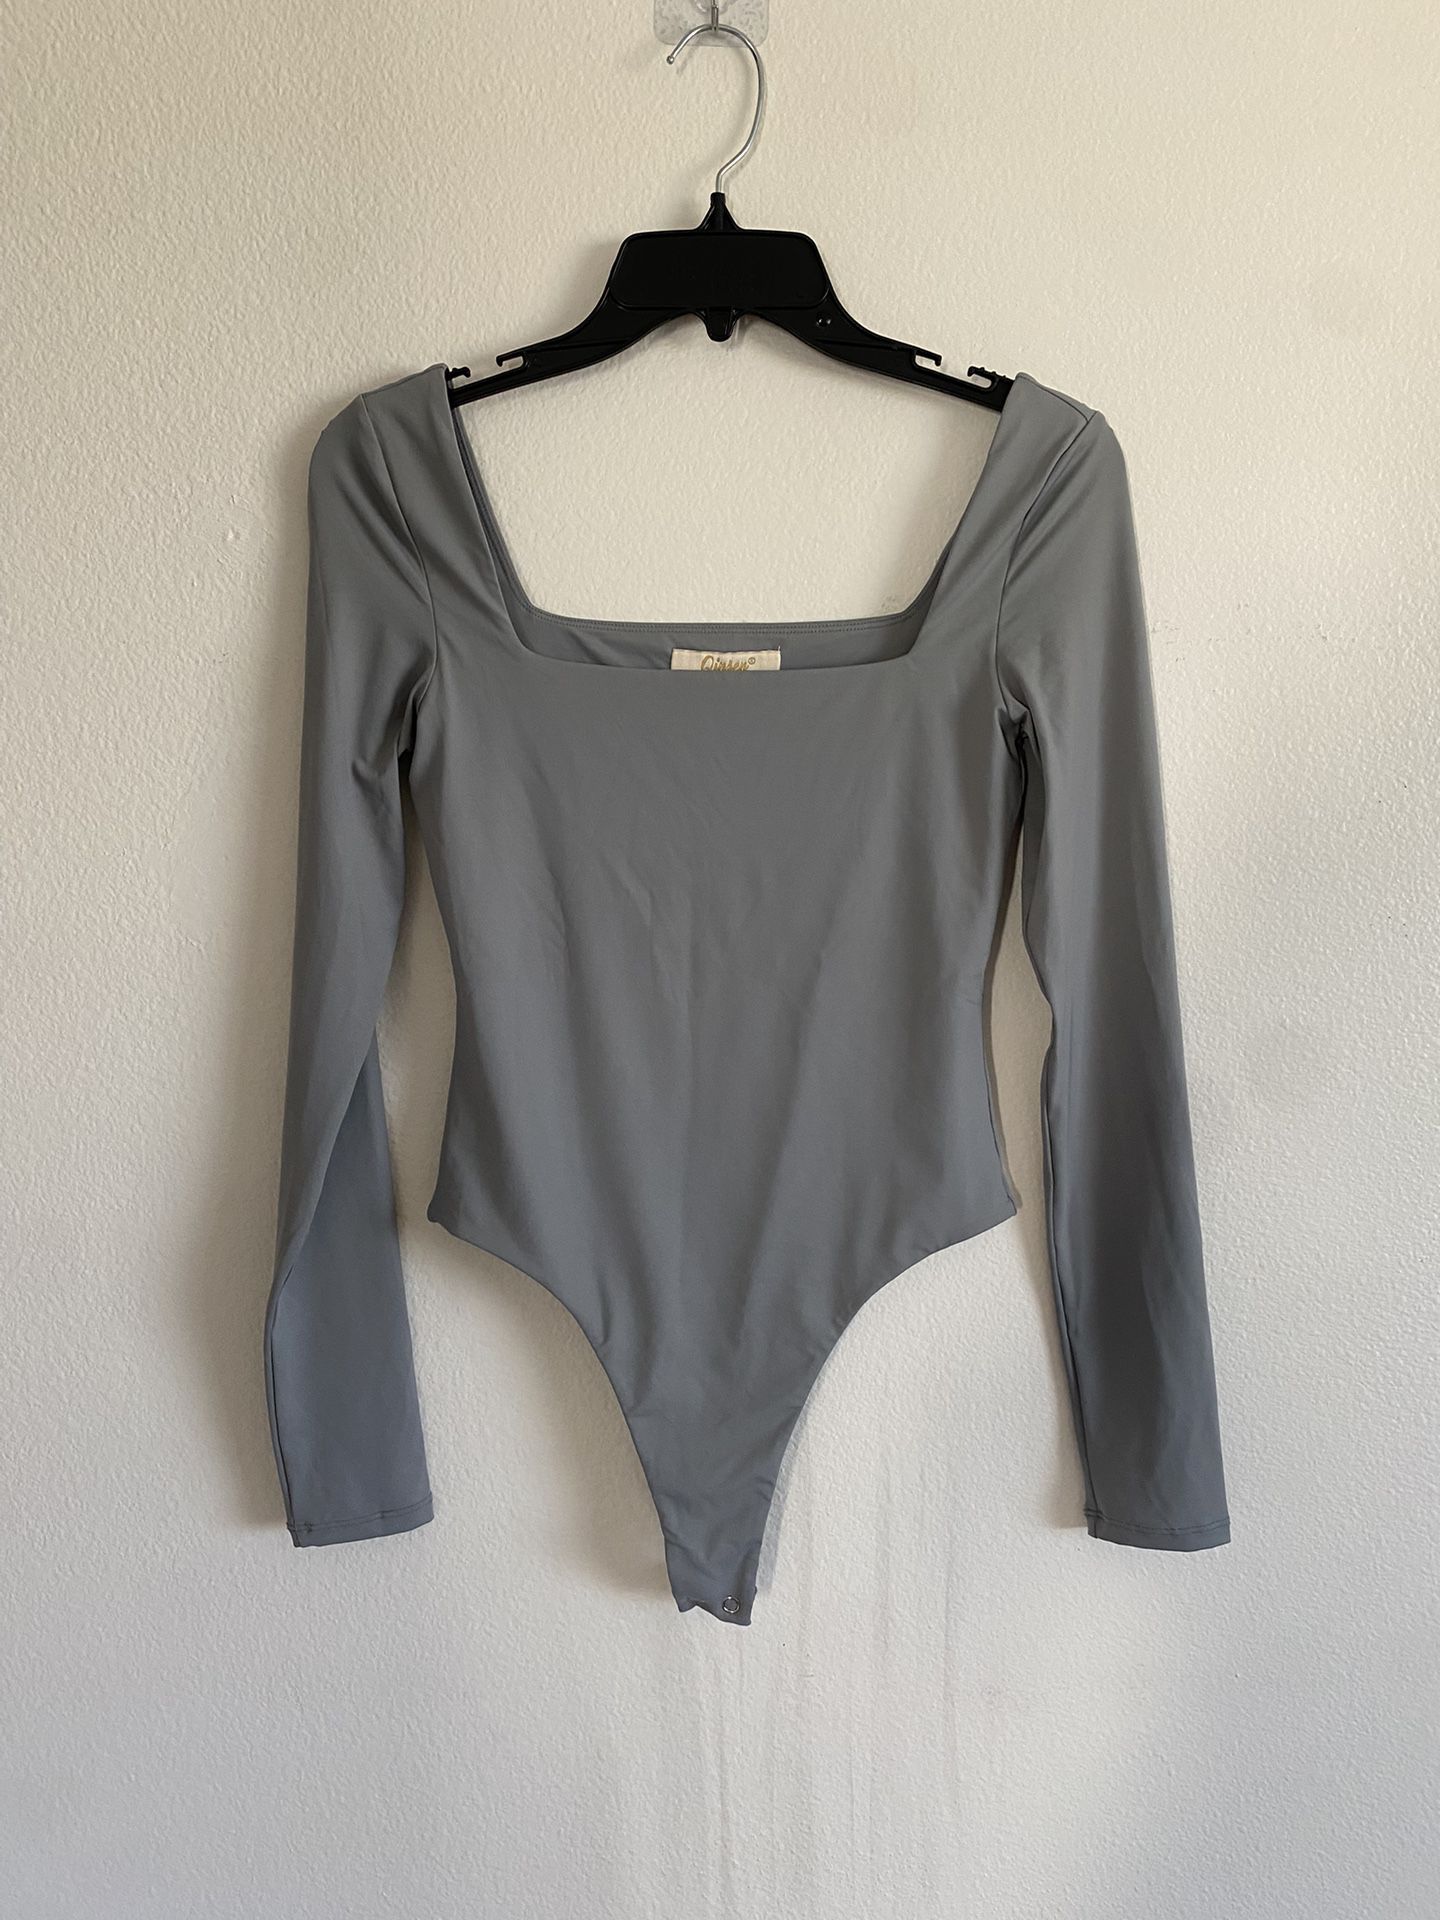 Qinsen Square Neck Long Sleeve Gray Bodysuit - Small 